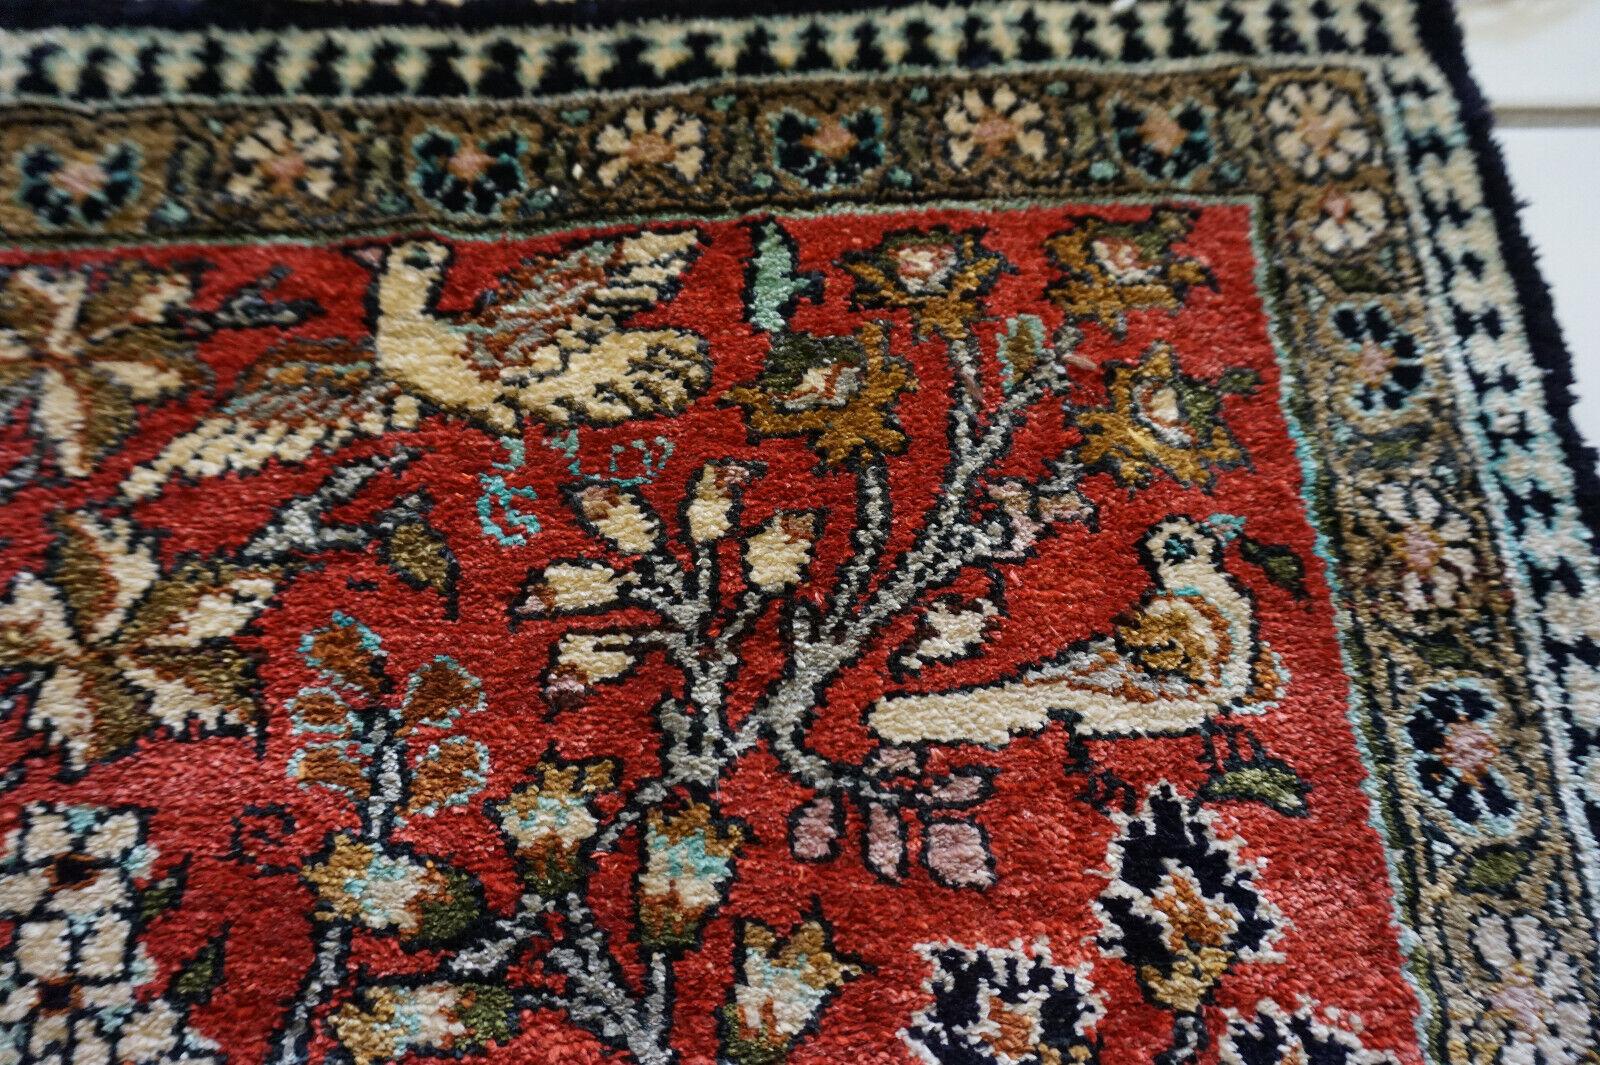 Handmade Vintage Persian Style Qum Silk Rug 1.9' x 2.5', 1970s - 1D64 For Sale 2